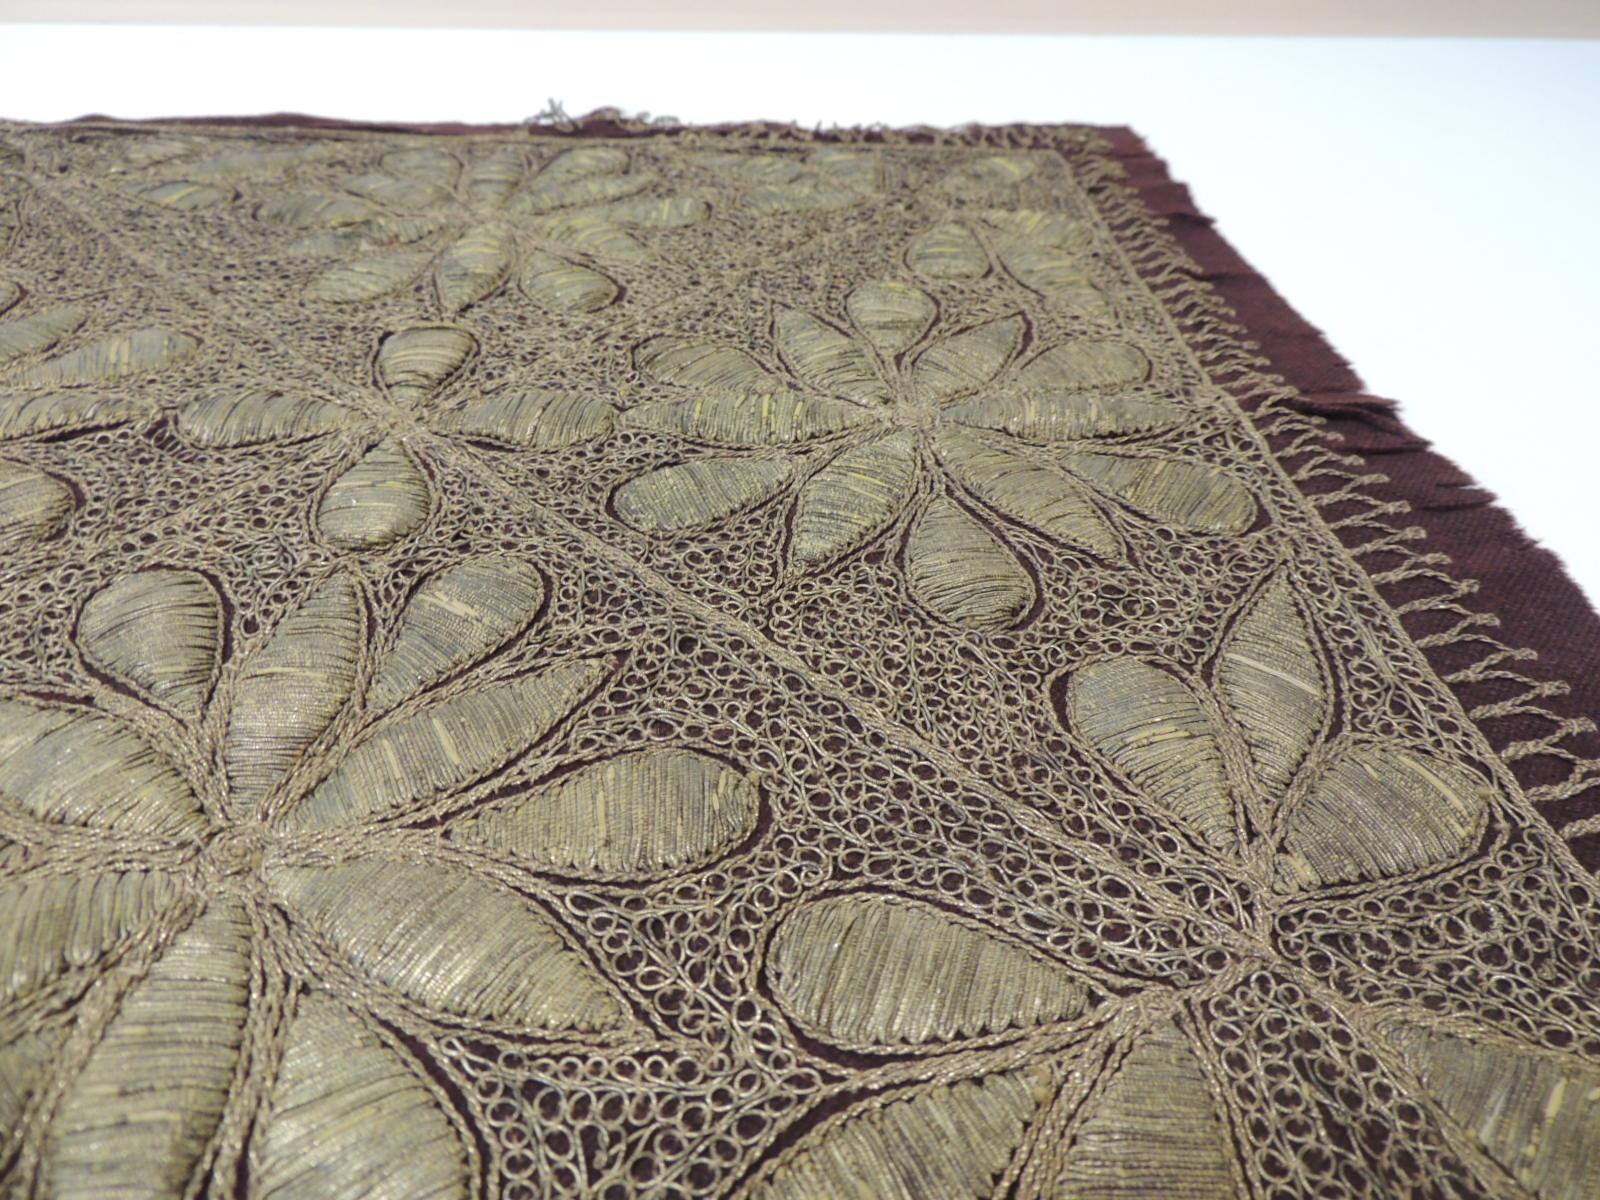 Moorish 19th Century Persian Ottoman Empire Gold Metallic Threads Embroidered Textile